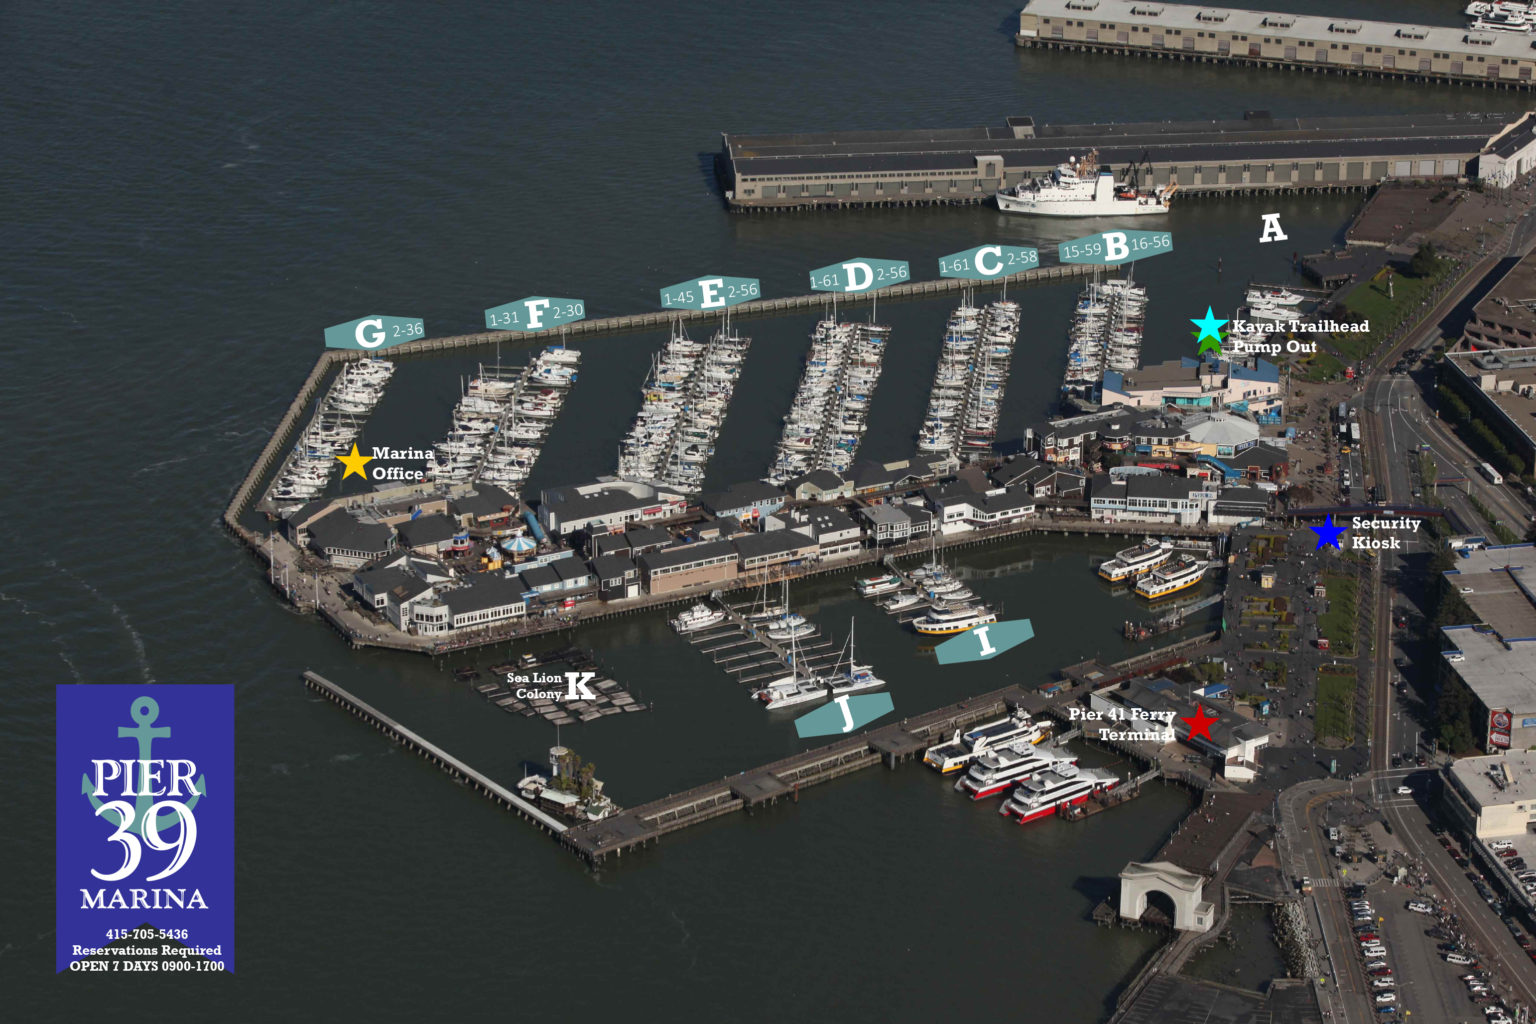 Pier 39 Marina Fisherman's Wharf - San Francisco - Marinalife